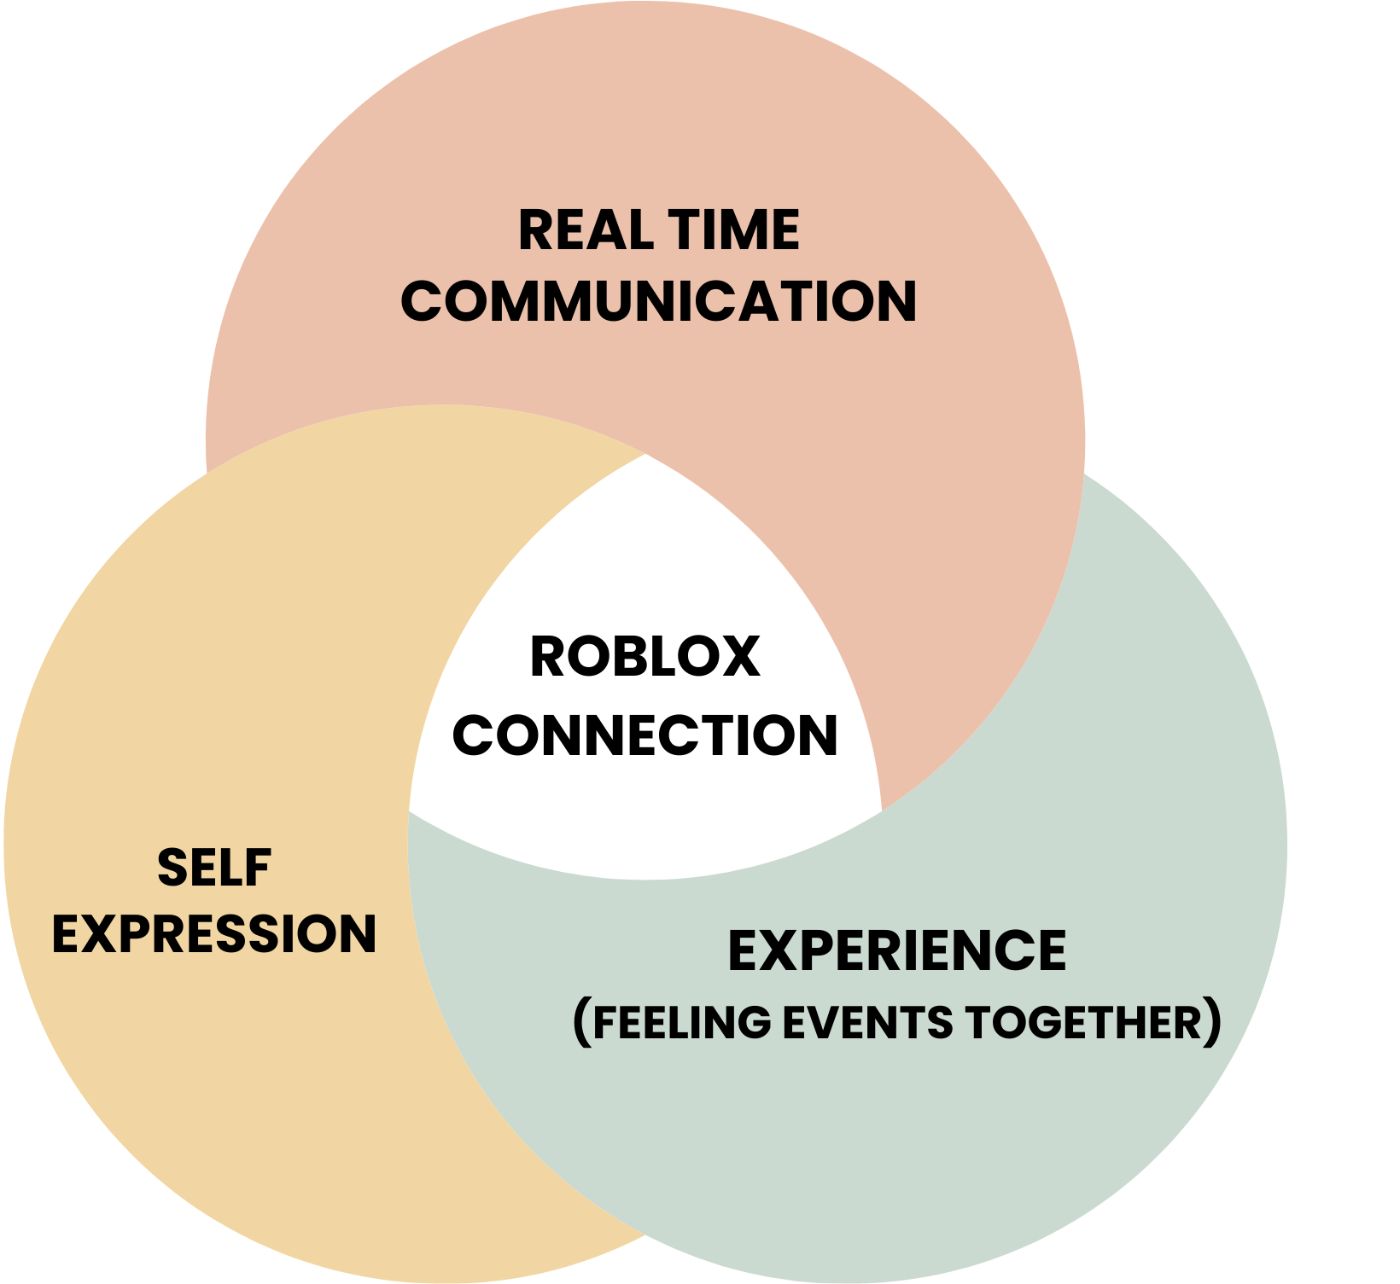 Roblox CEO reveals plan for billion-user metaverse - ReadWrite